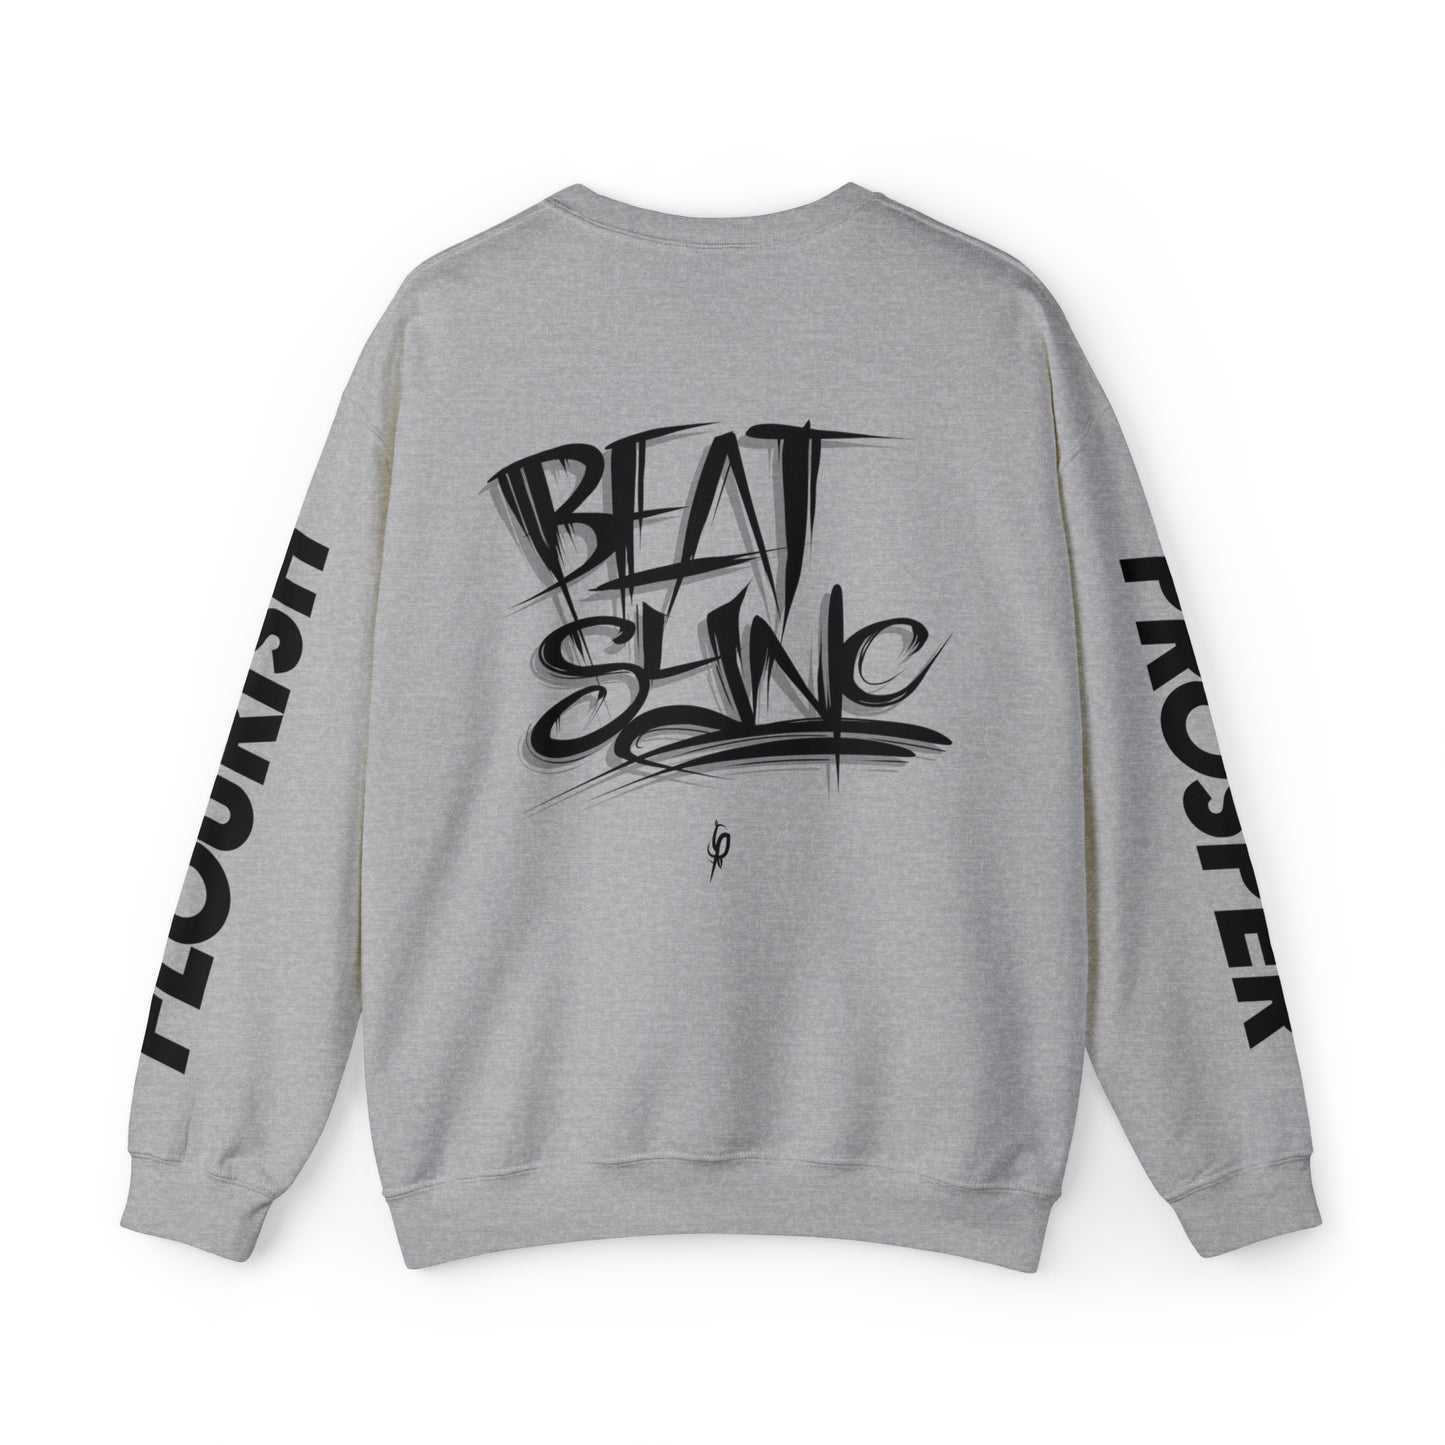 Chop Lui Beat Sync Unisex Crewneck Sweatshirt